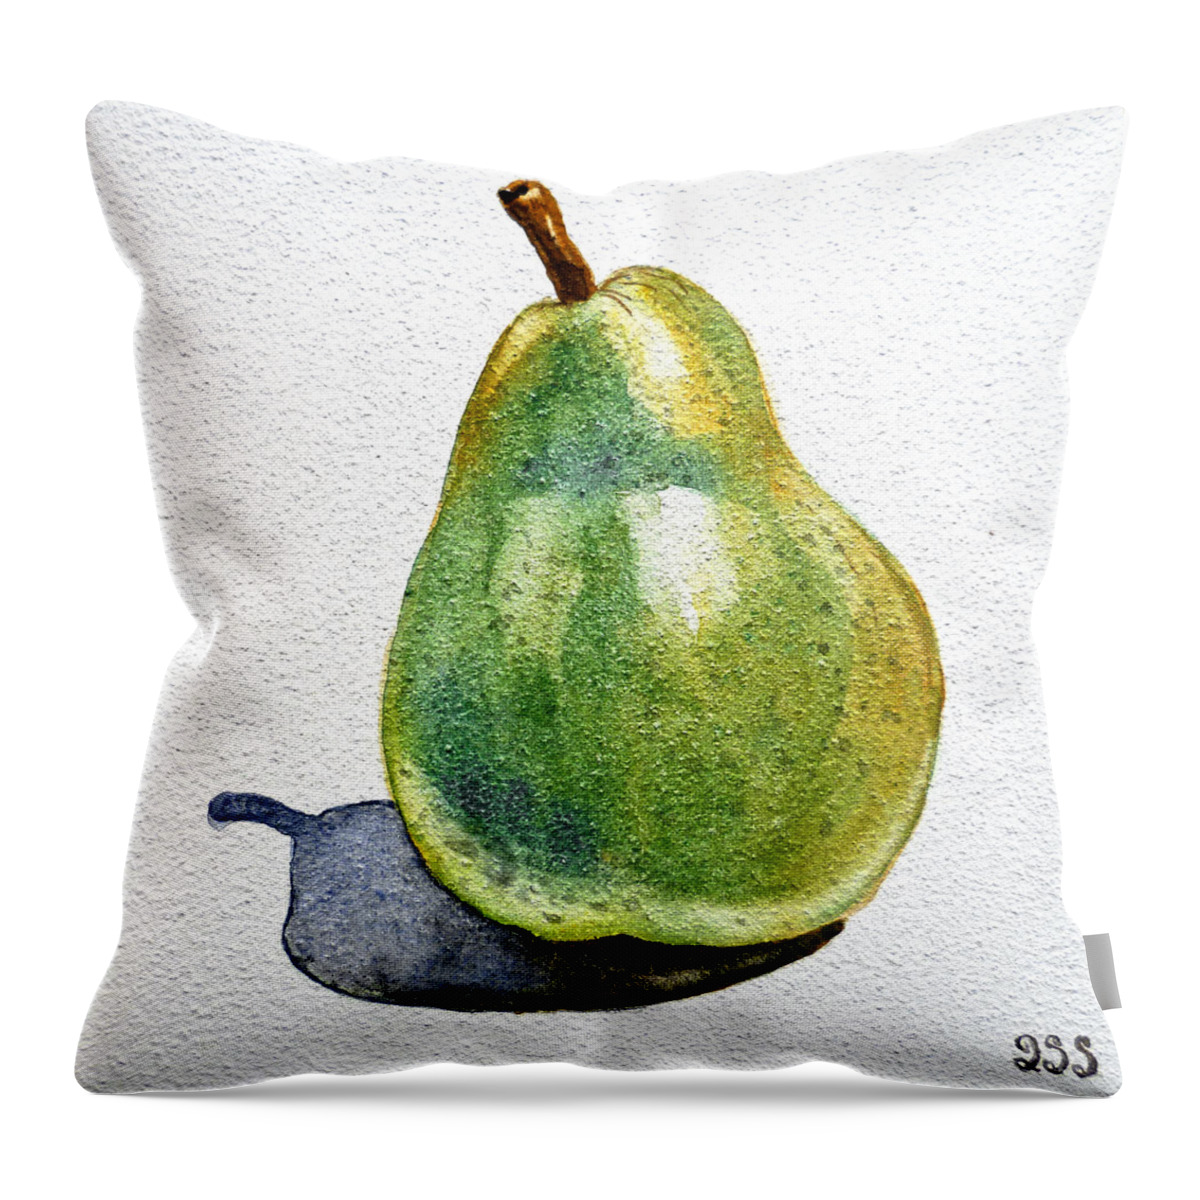 Pear Throw Pillow featuring the painting Pear by Irina Sztukowski